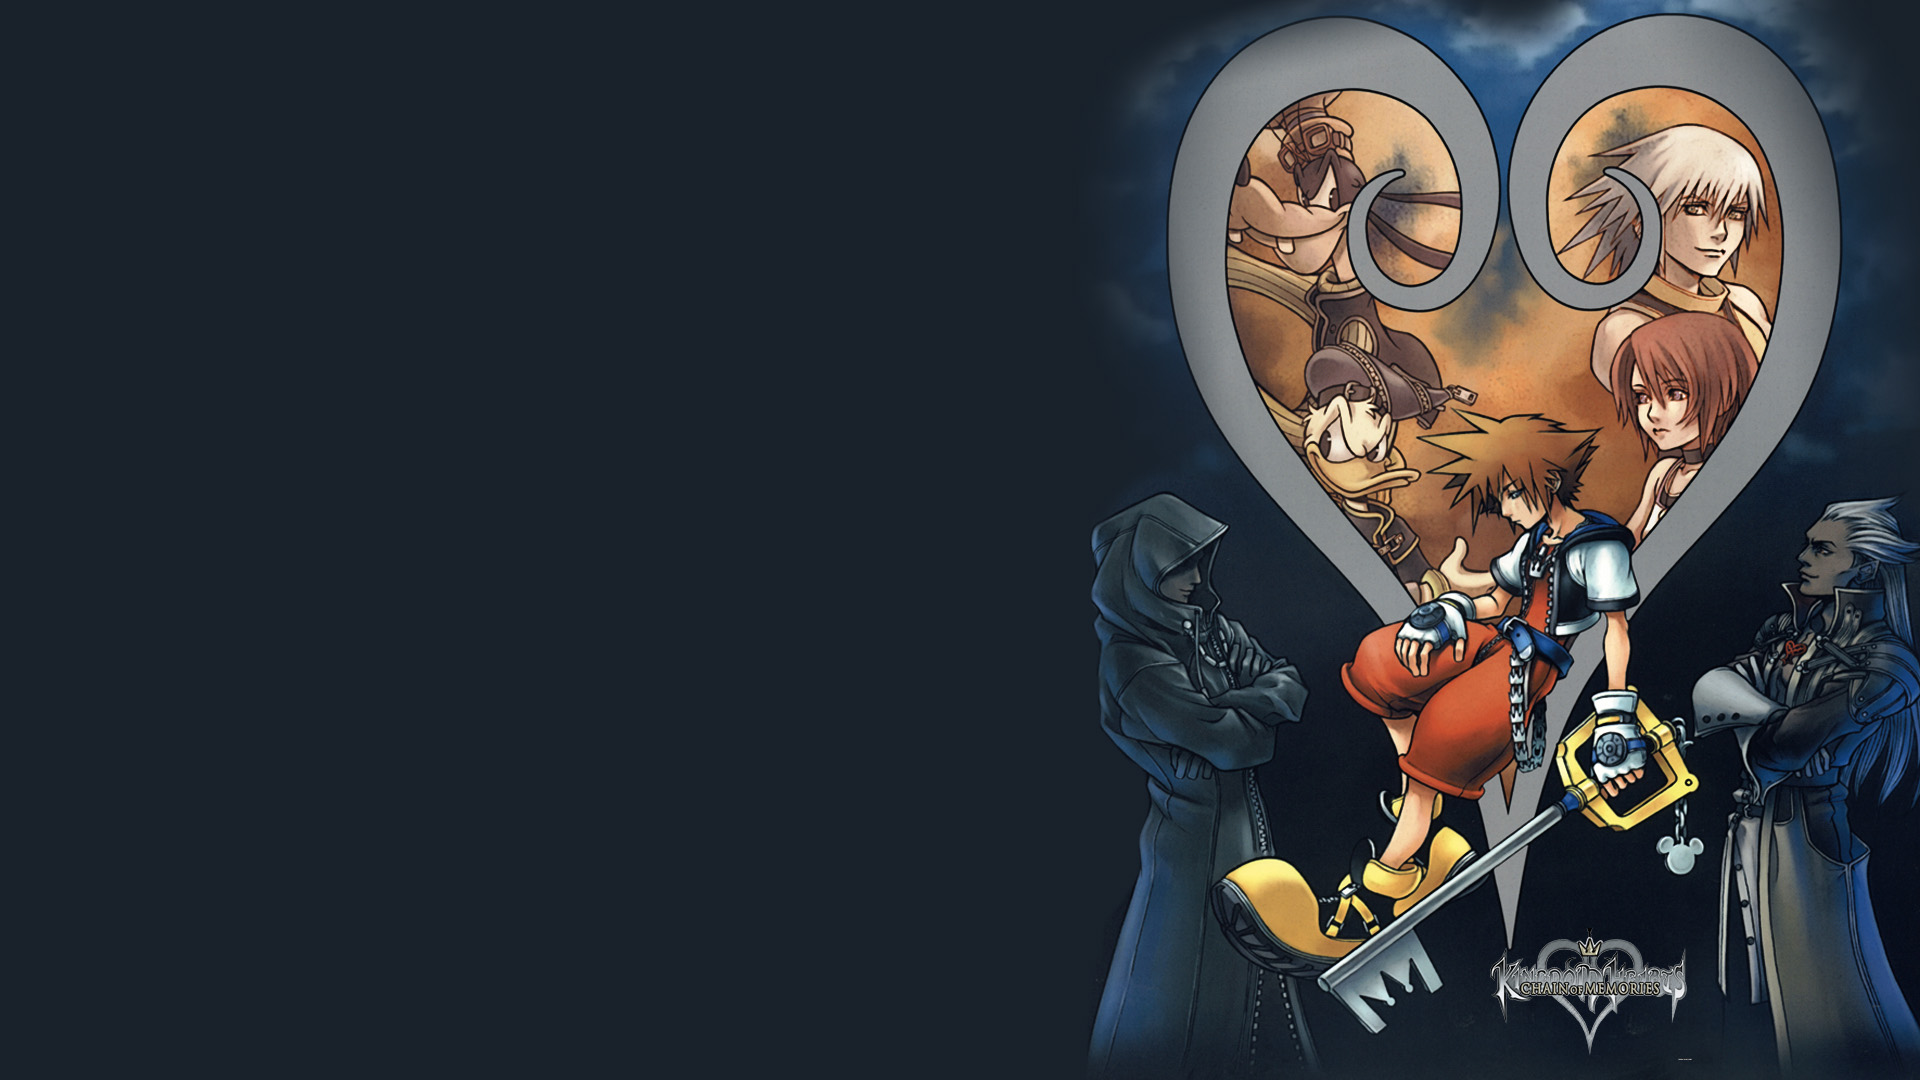 Завантажити шпалери Kingdom Hearts: Chain Of Memories на телефон безкоштовно